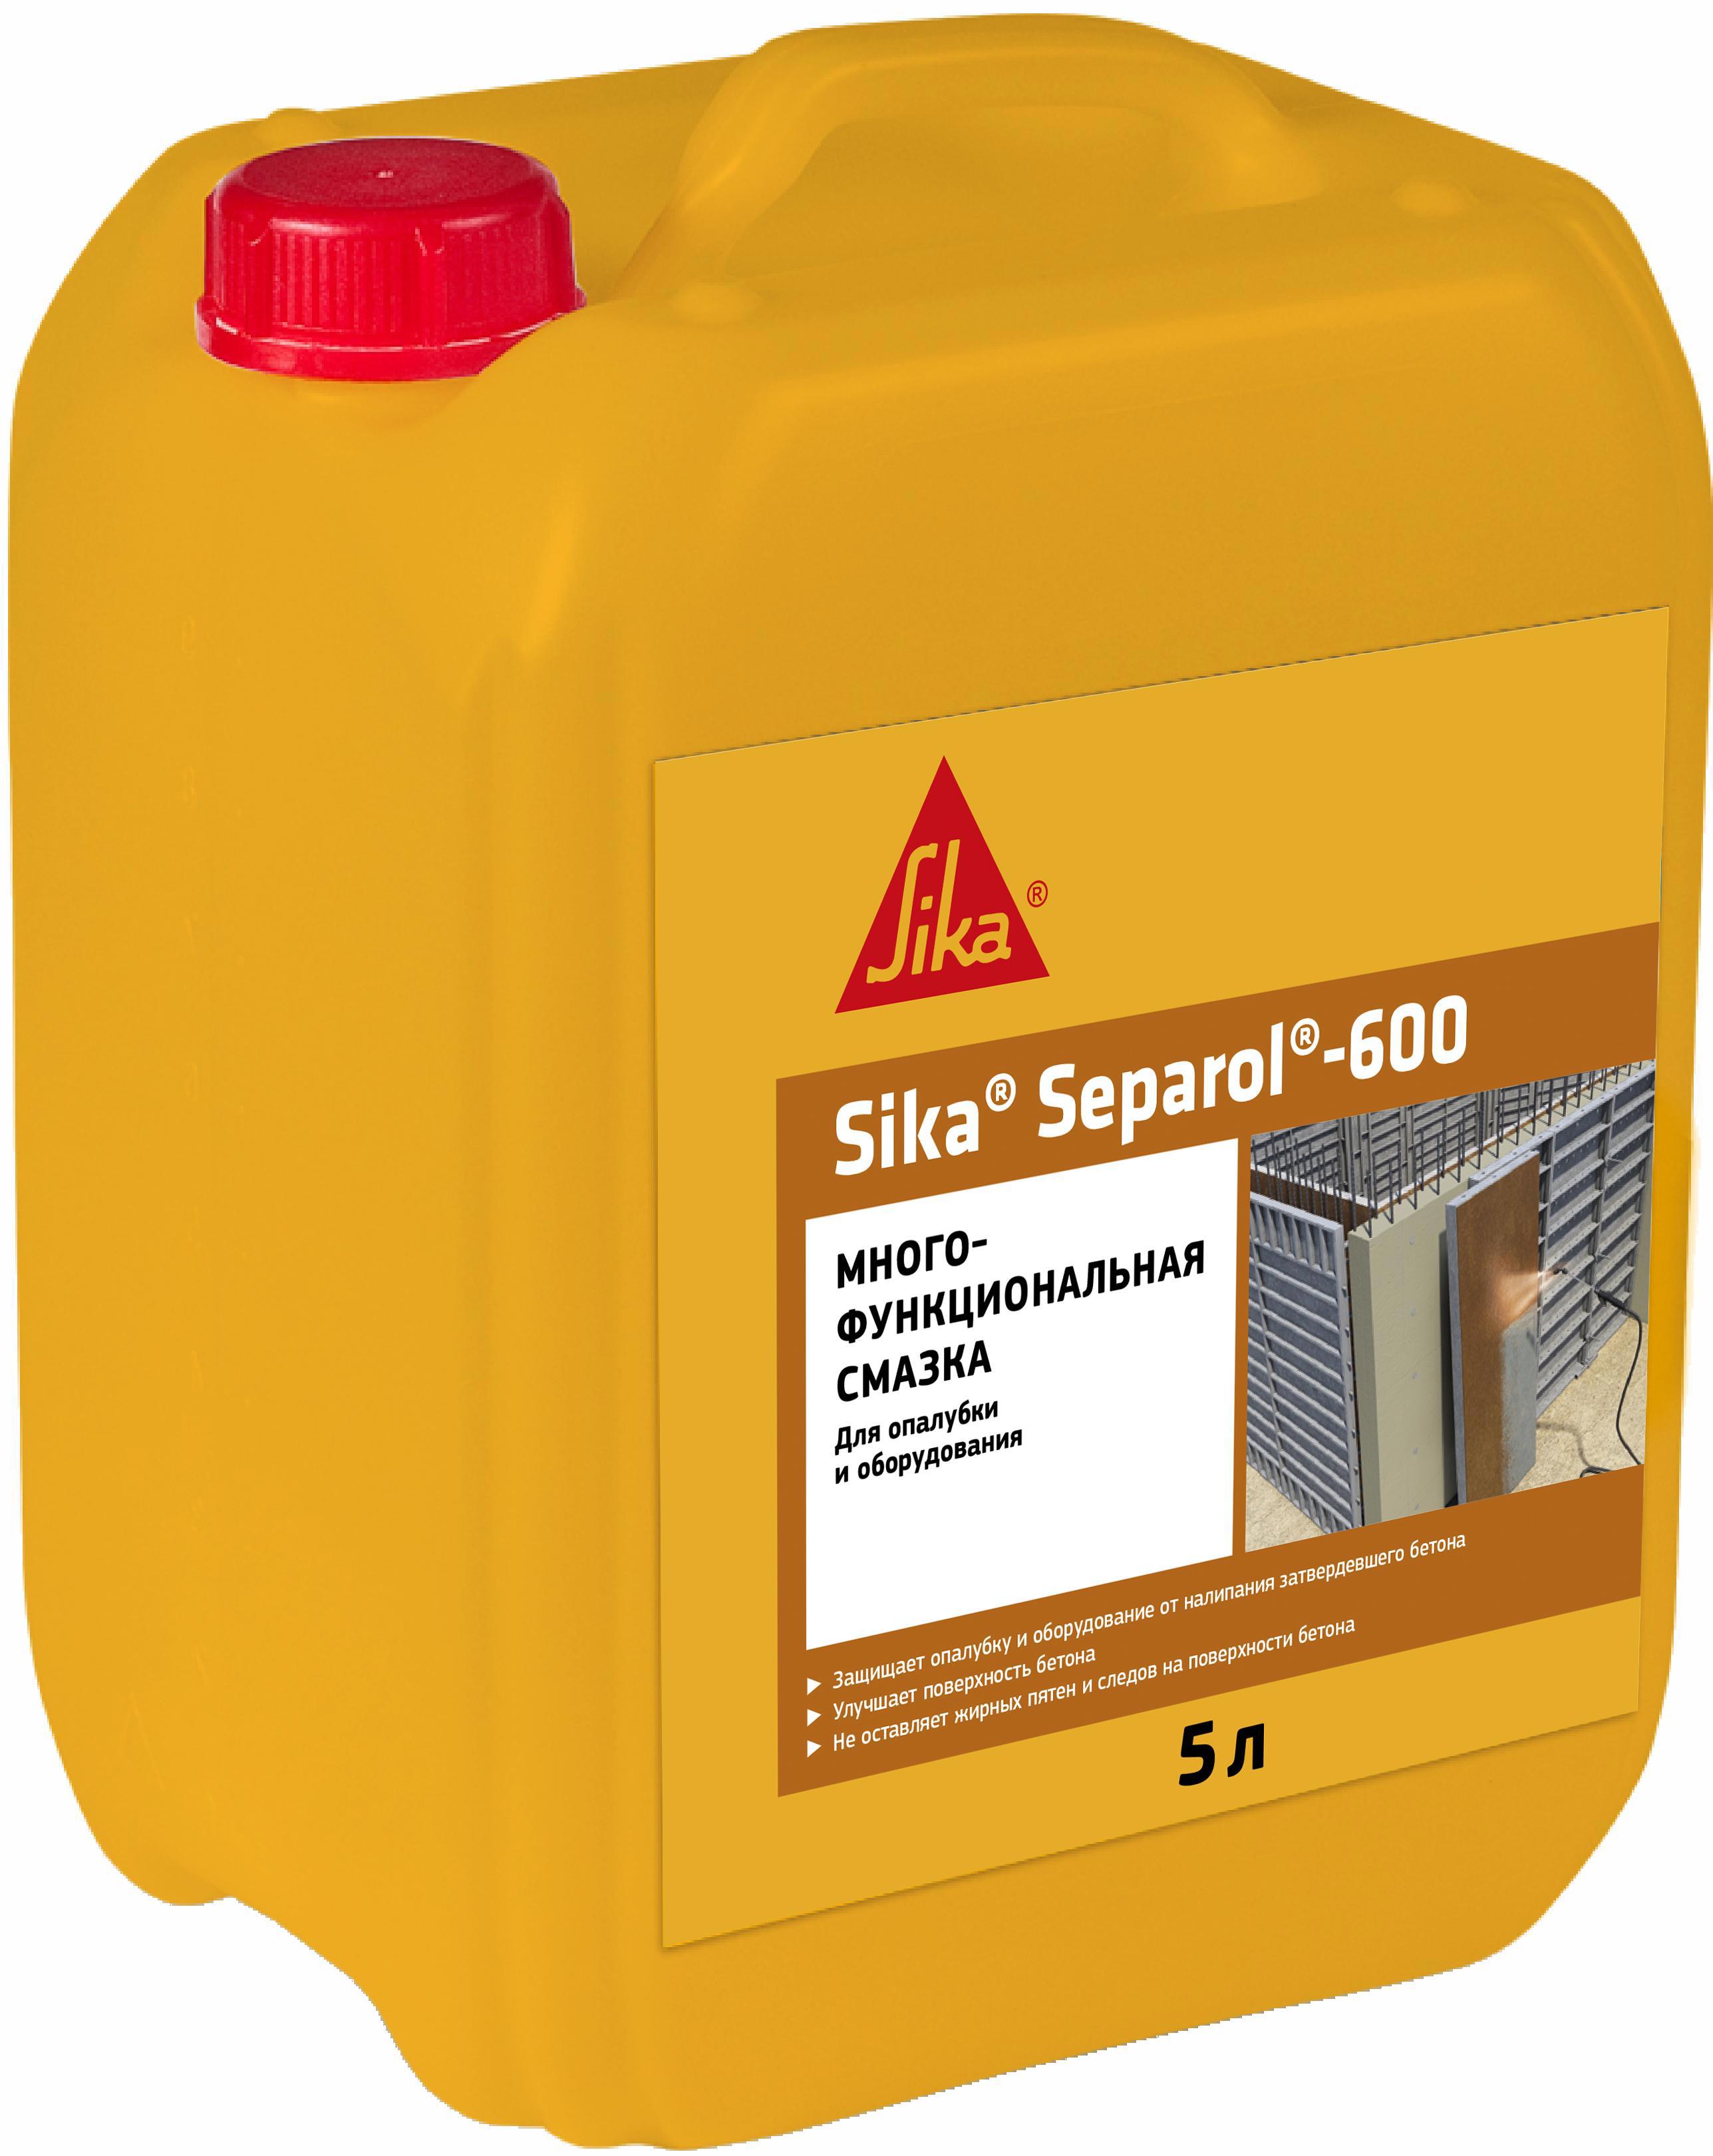 90260635 Смазка синтетическая Separol-600 для форм и опалубки 5 л STLM-0153547 SIKA